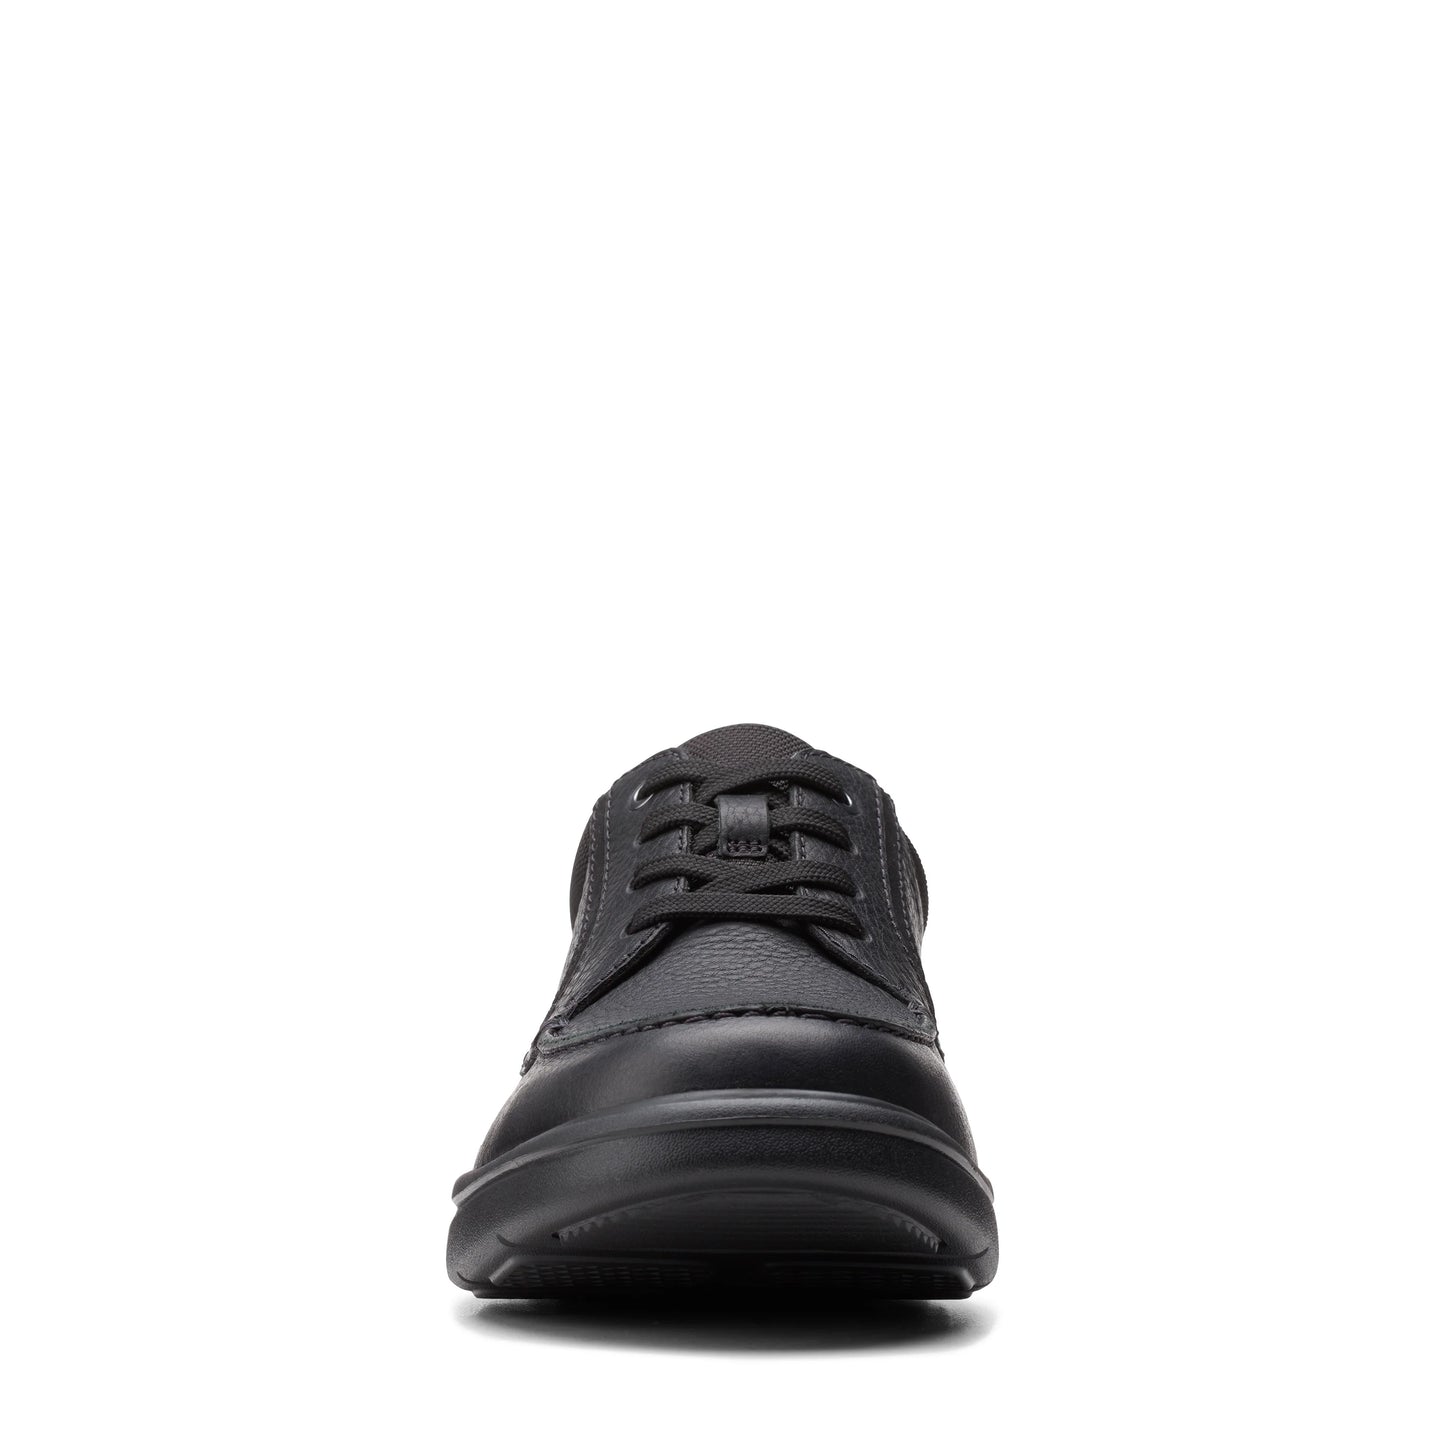 CLARKS | أحذية ديربي للرجال | BRADLEY VIBE BLK TUMBLED LEA | أسود